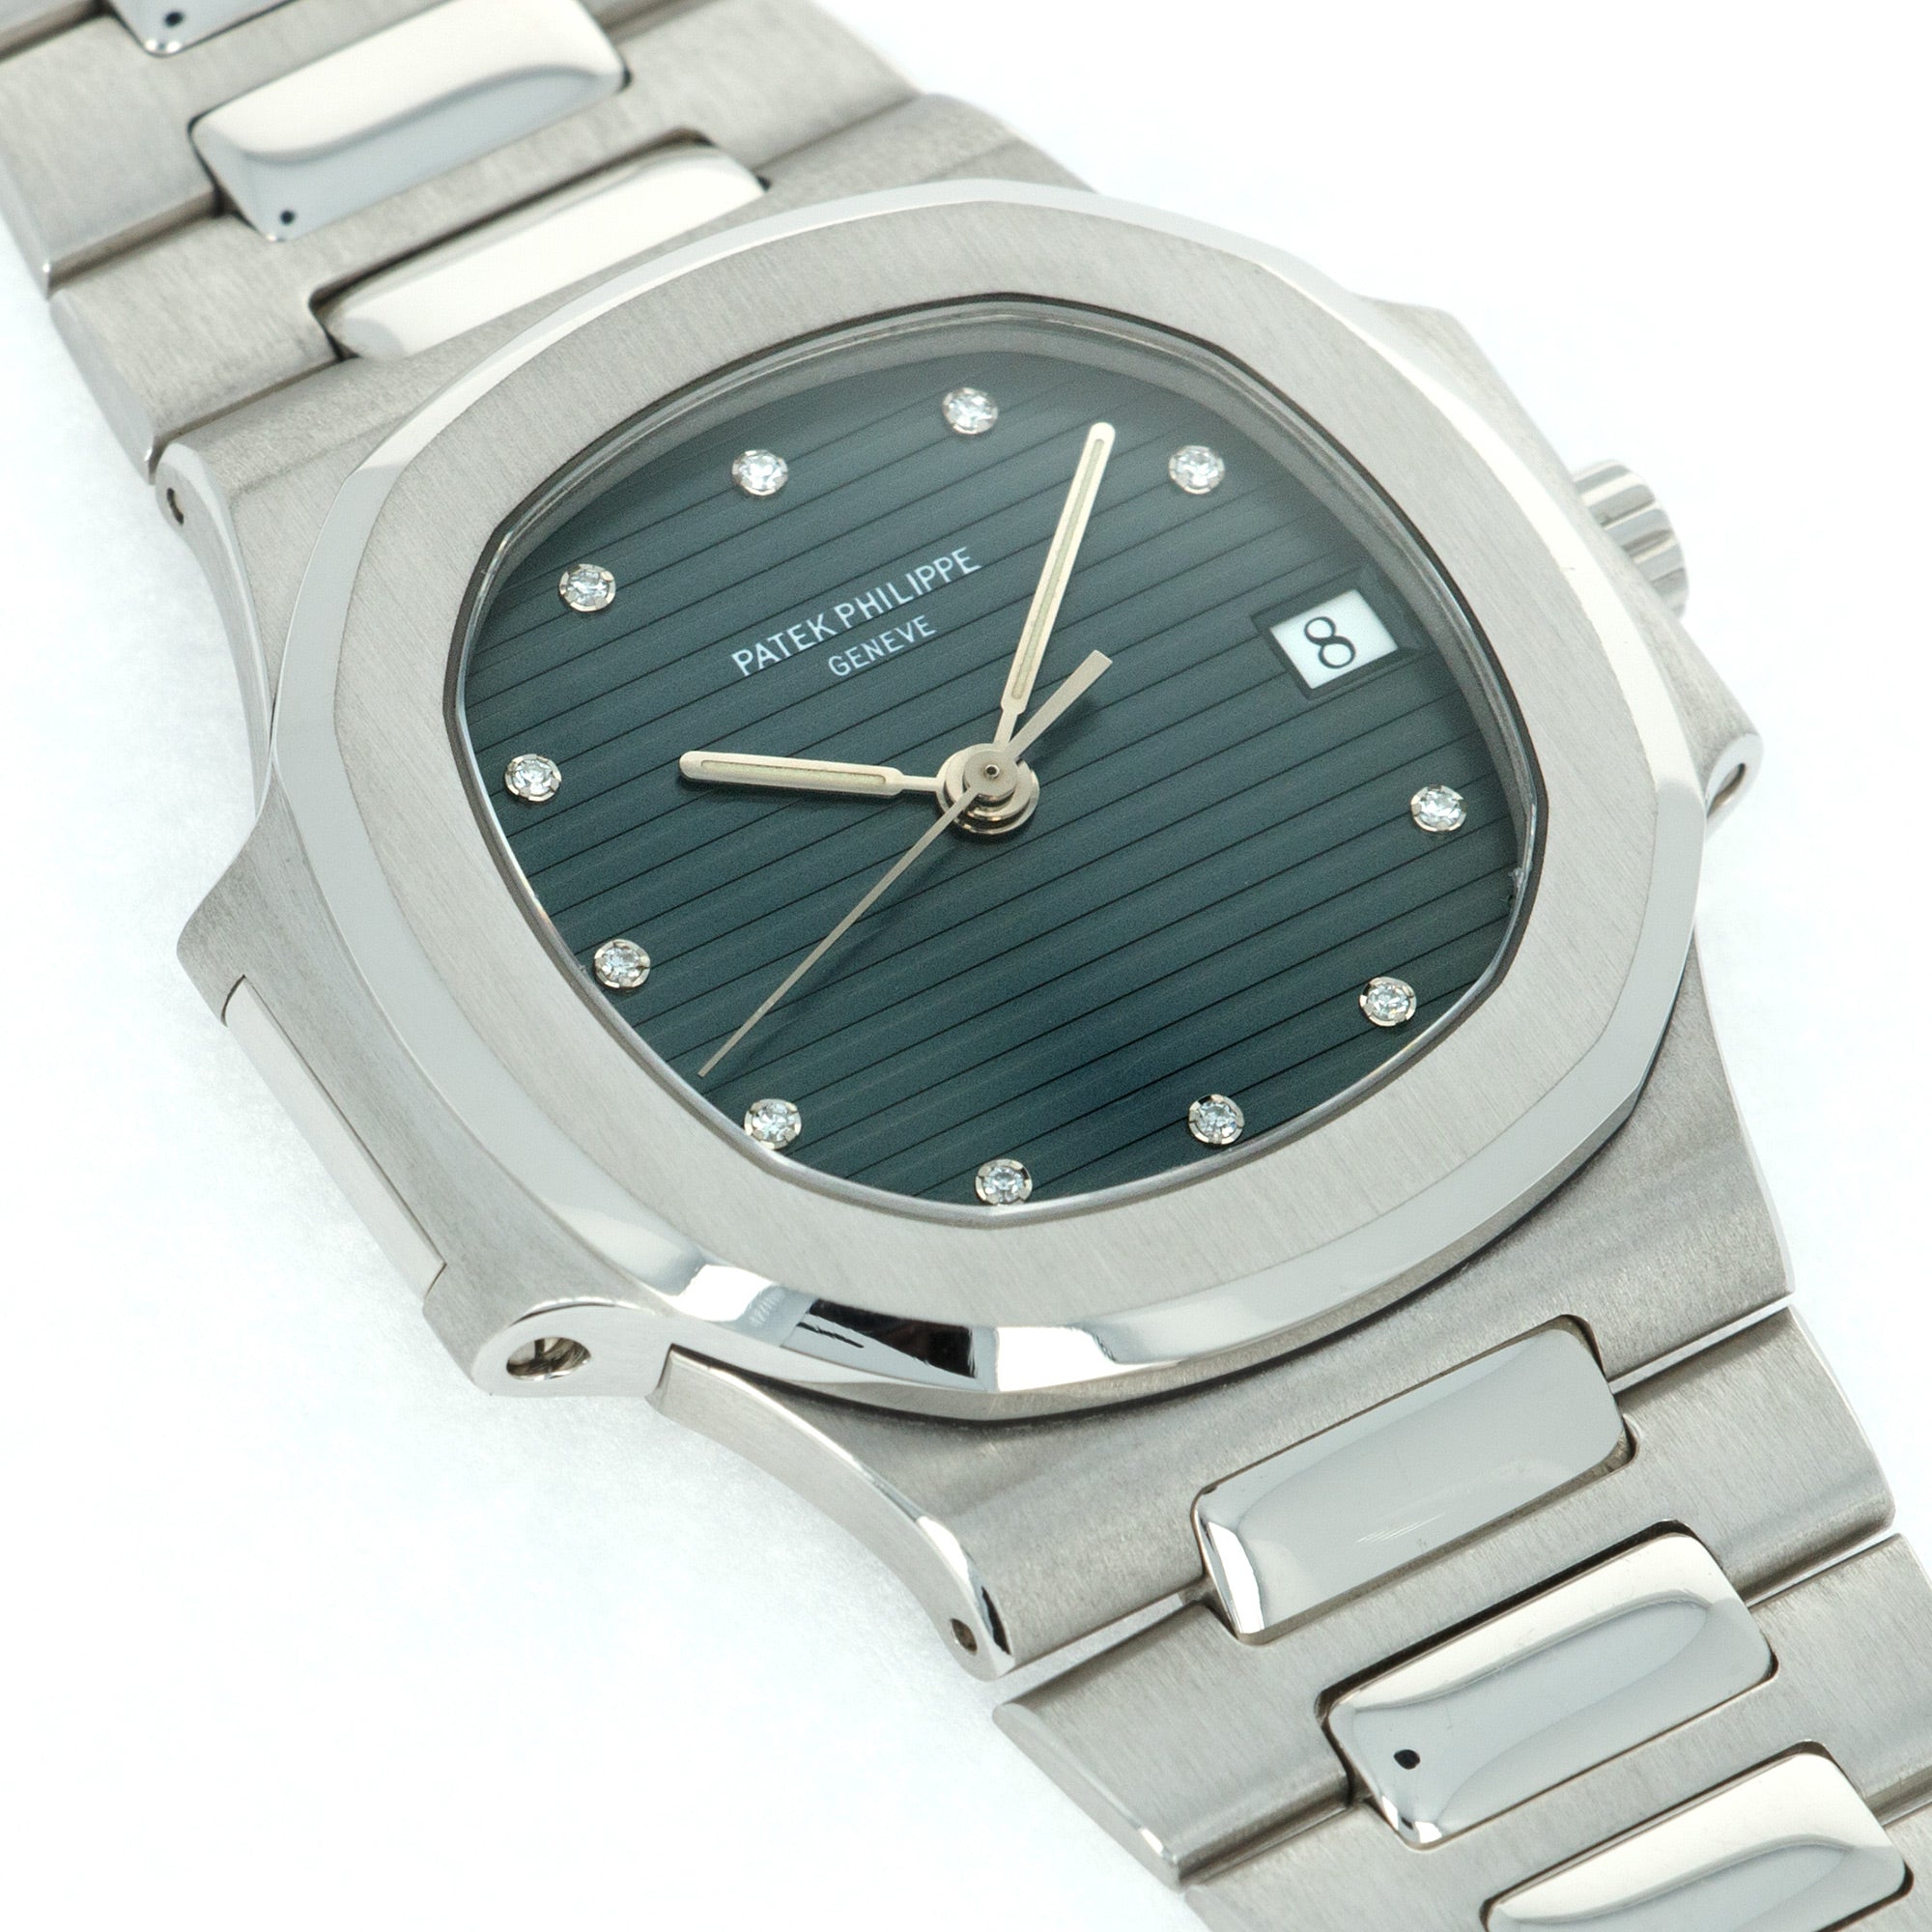 Patek Philippe - Patek Philippe Platinum Nautilus Watch Ref. 3800 with Original Warranty - The Keystone Watches